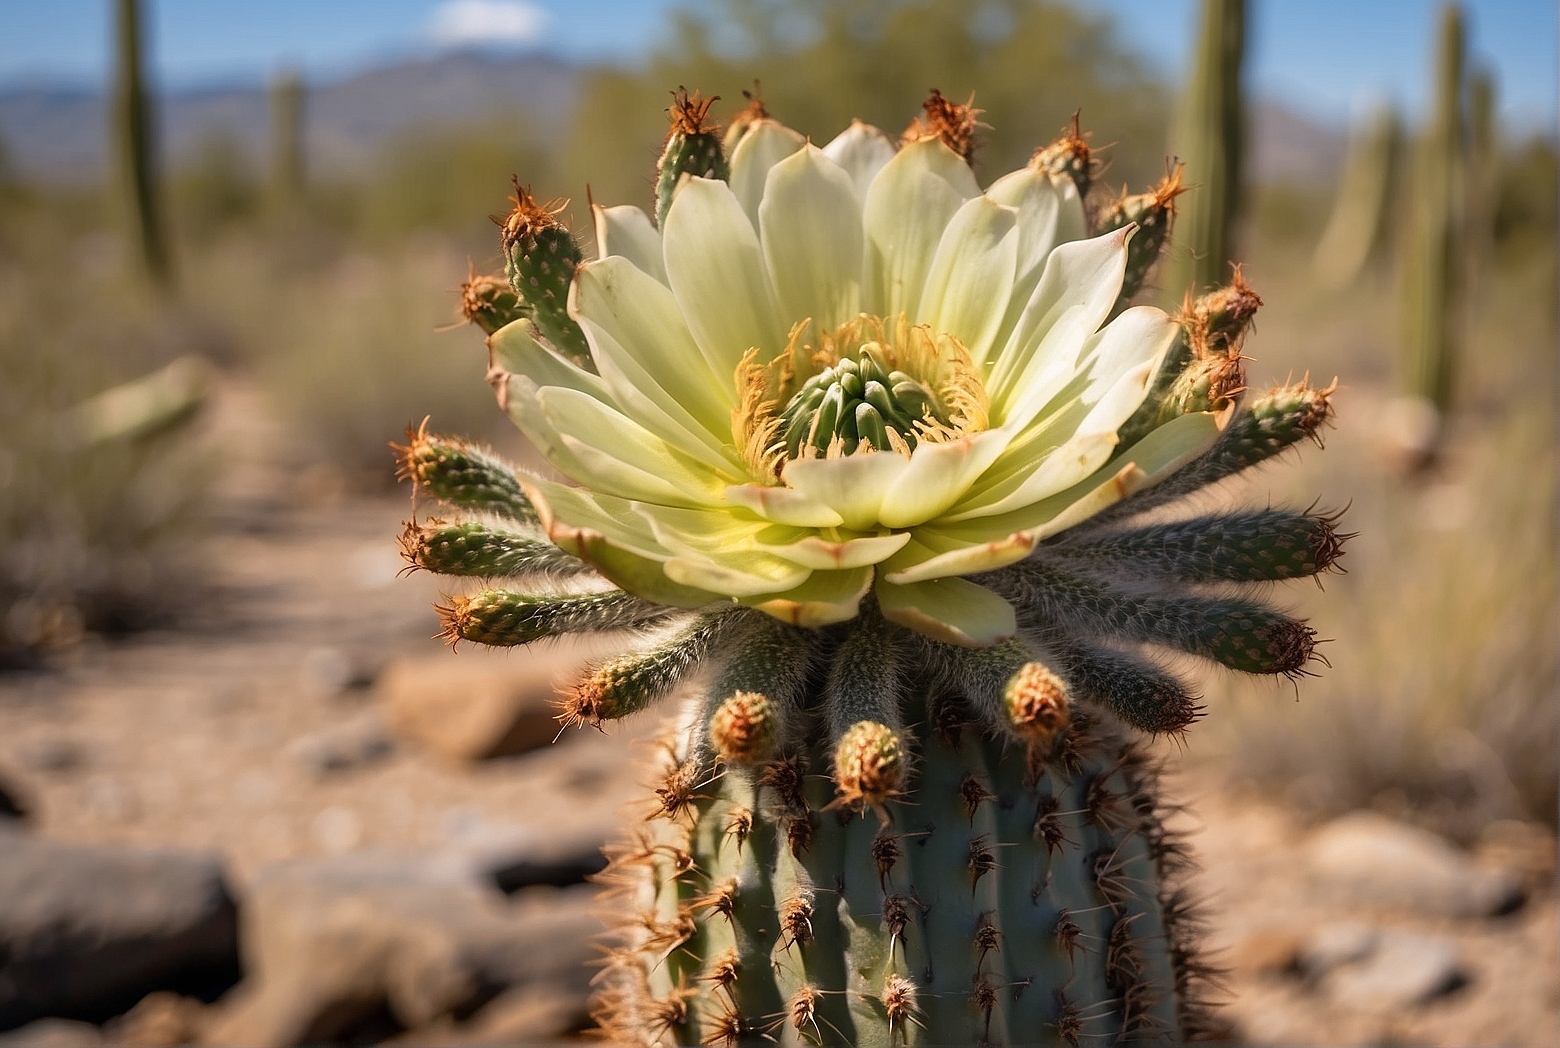 Are Saguaro Cacti Endangered?